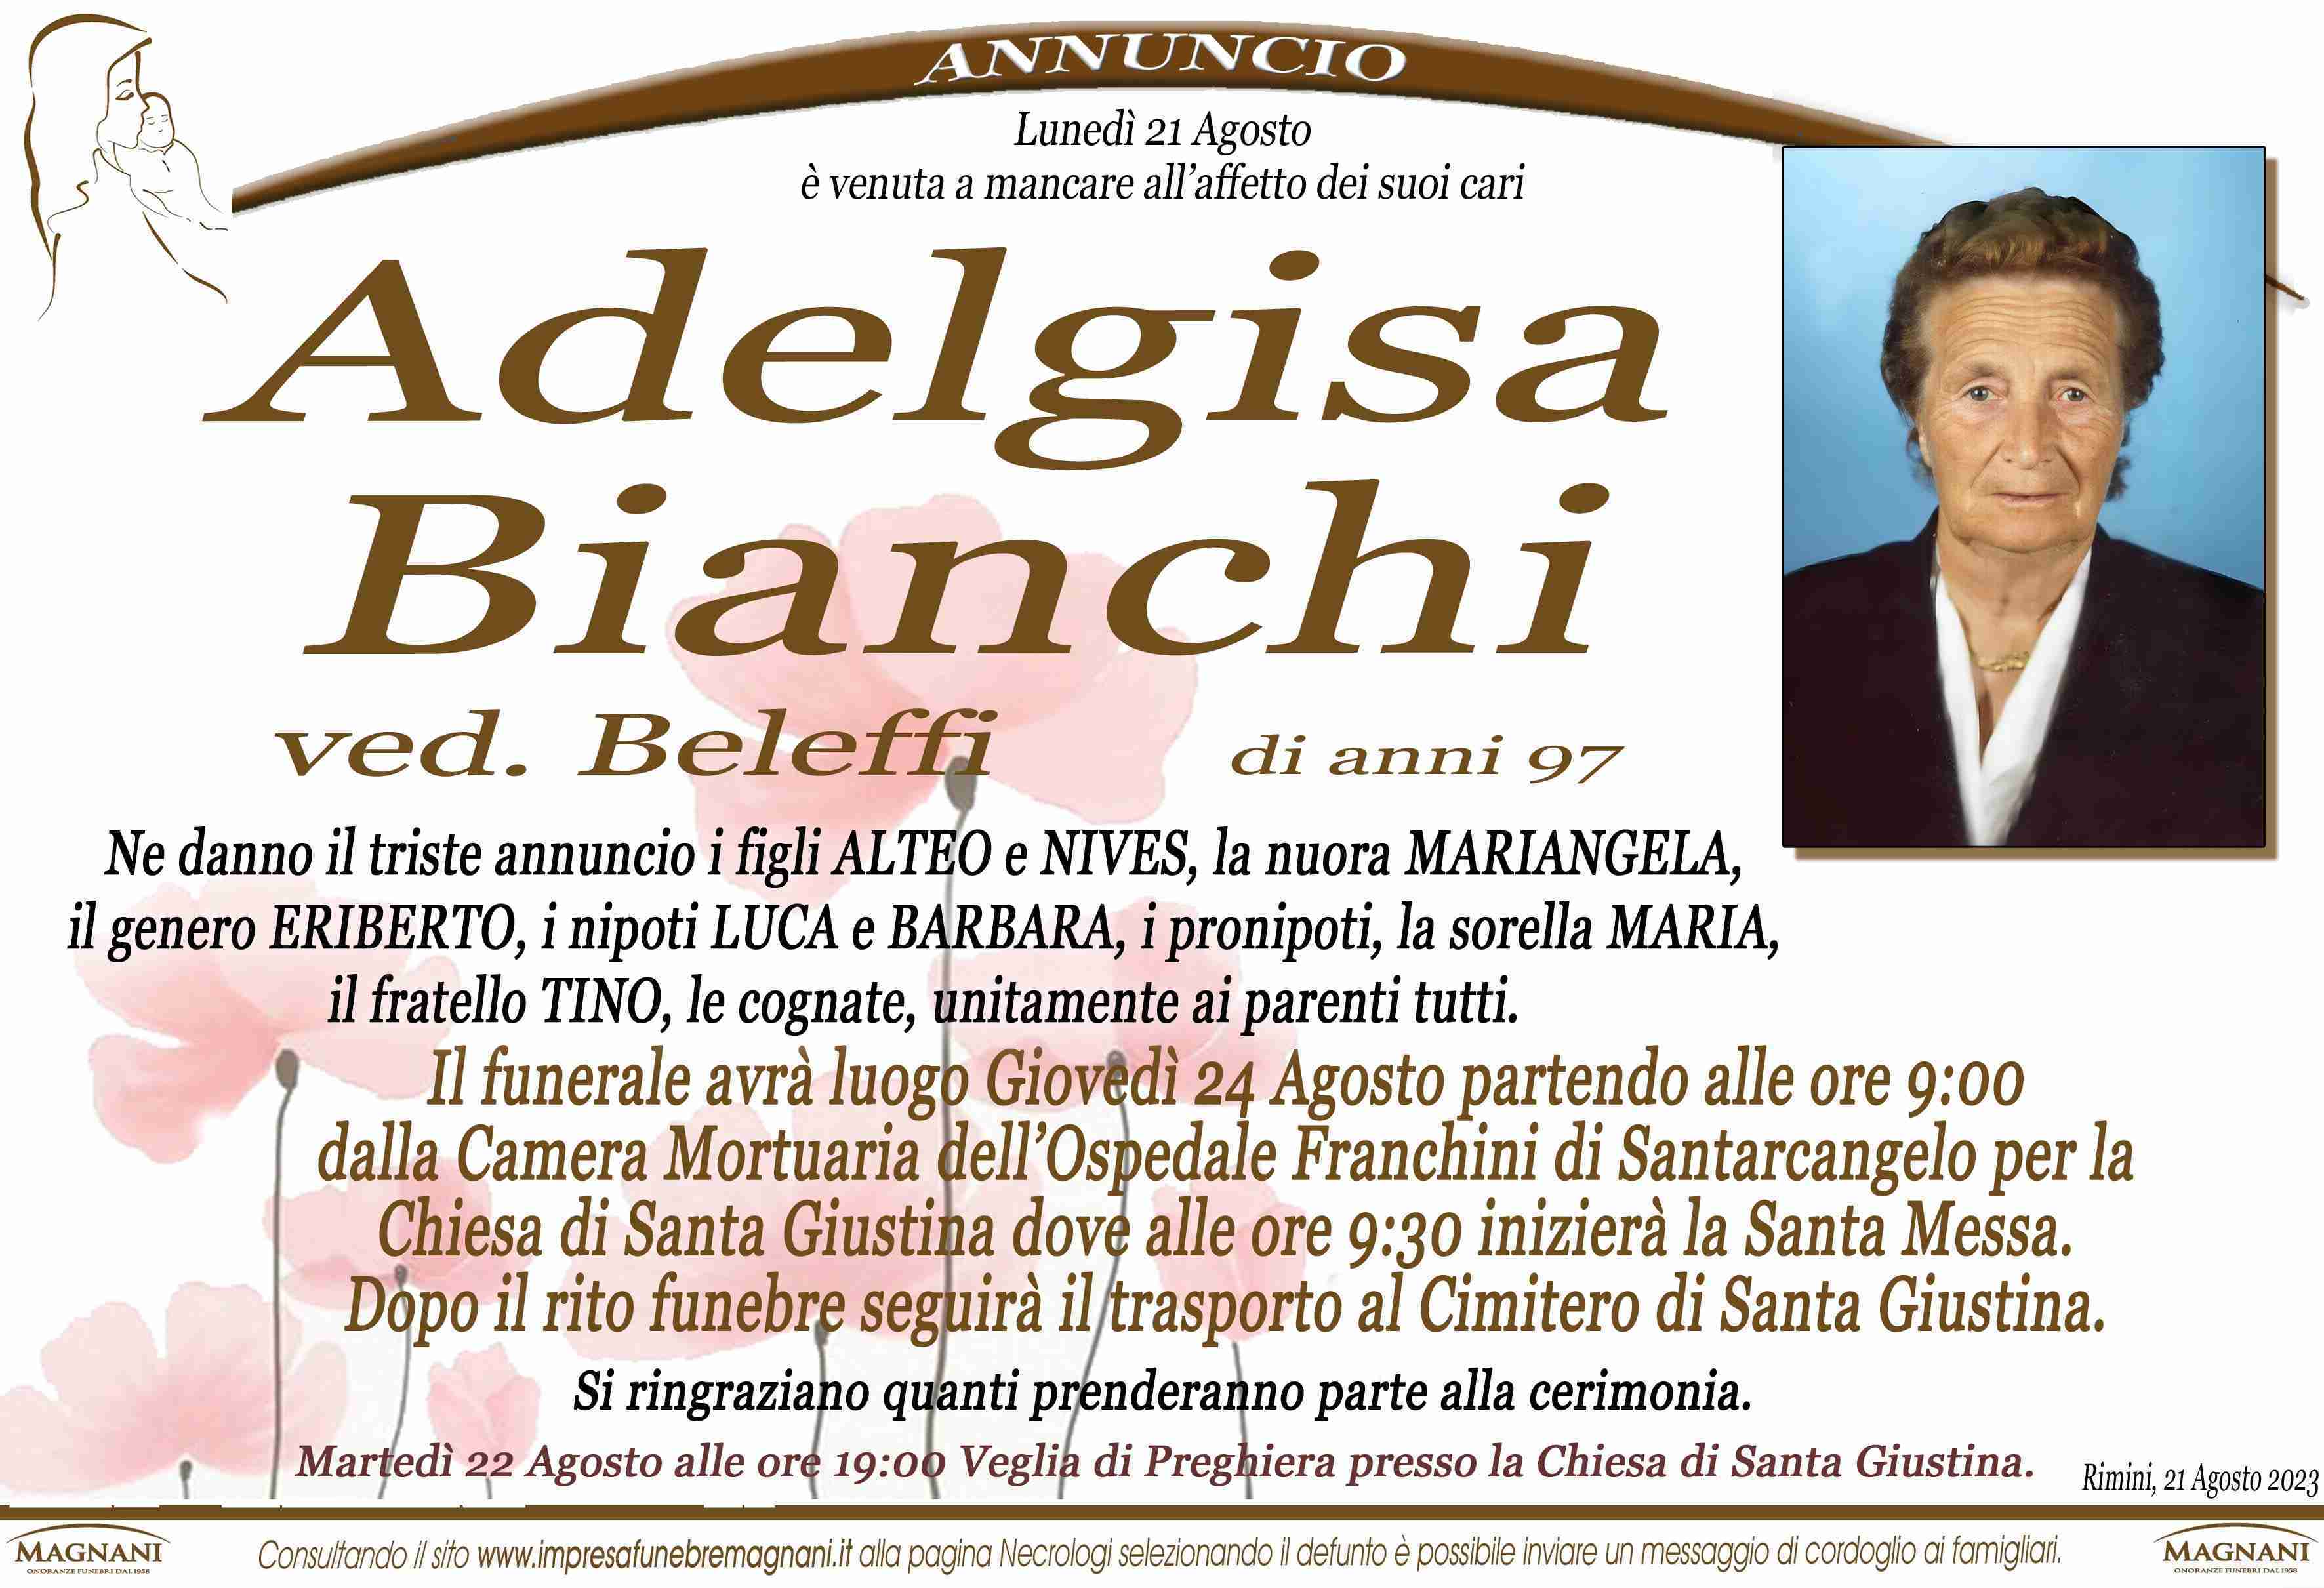 Adelgisa Bianchi